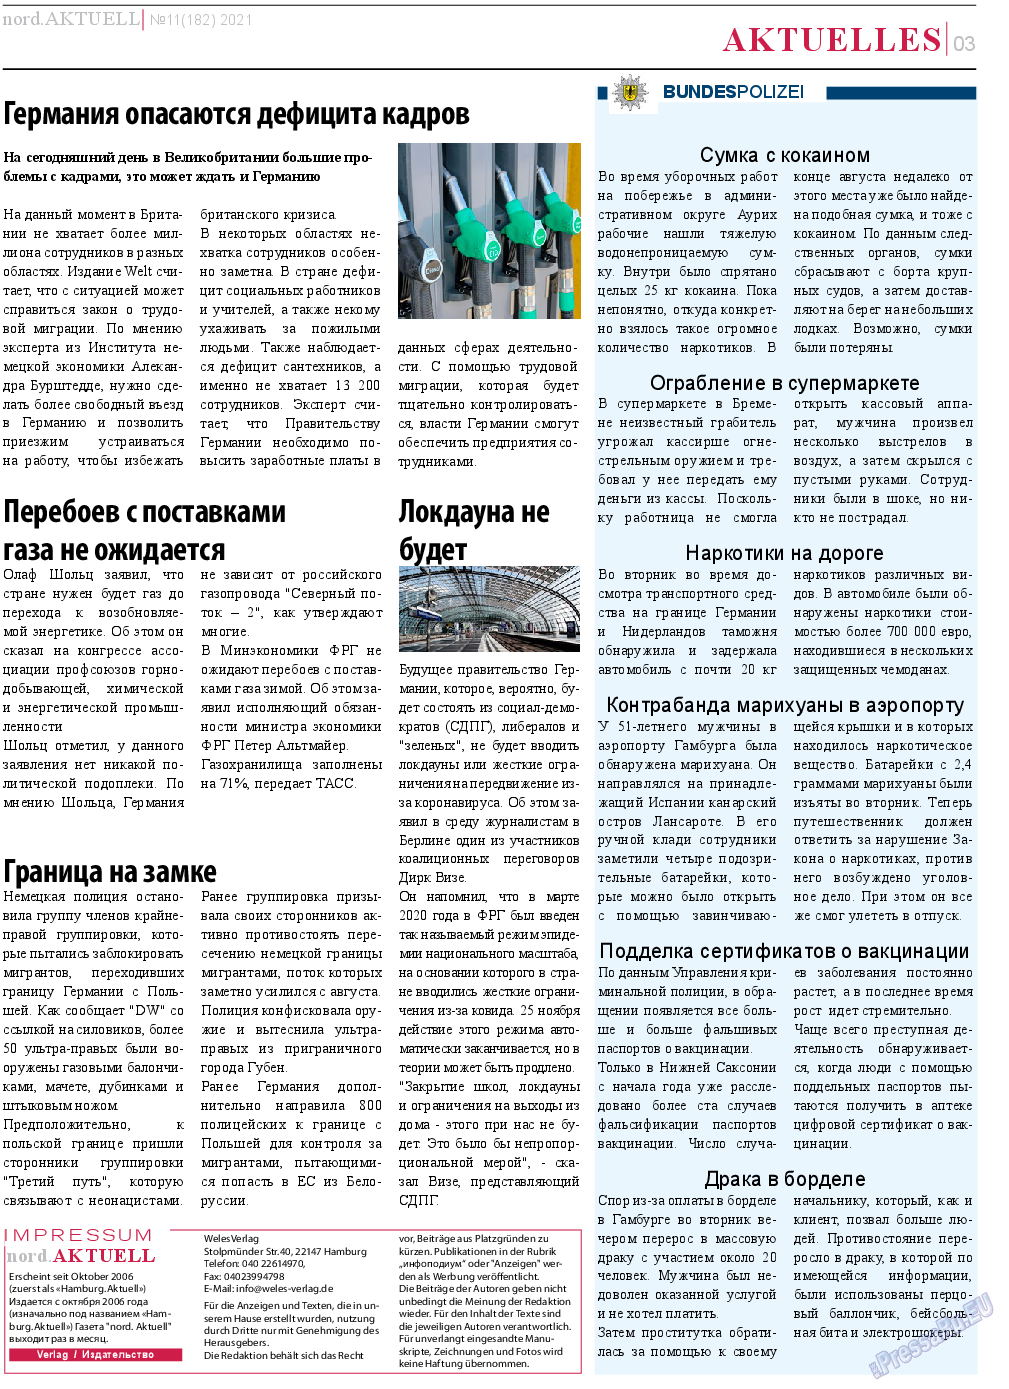 nord.Aktuell (газета). 2021 год, номер 11, стр. 3